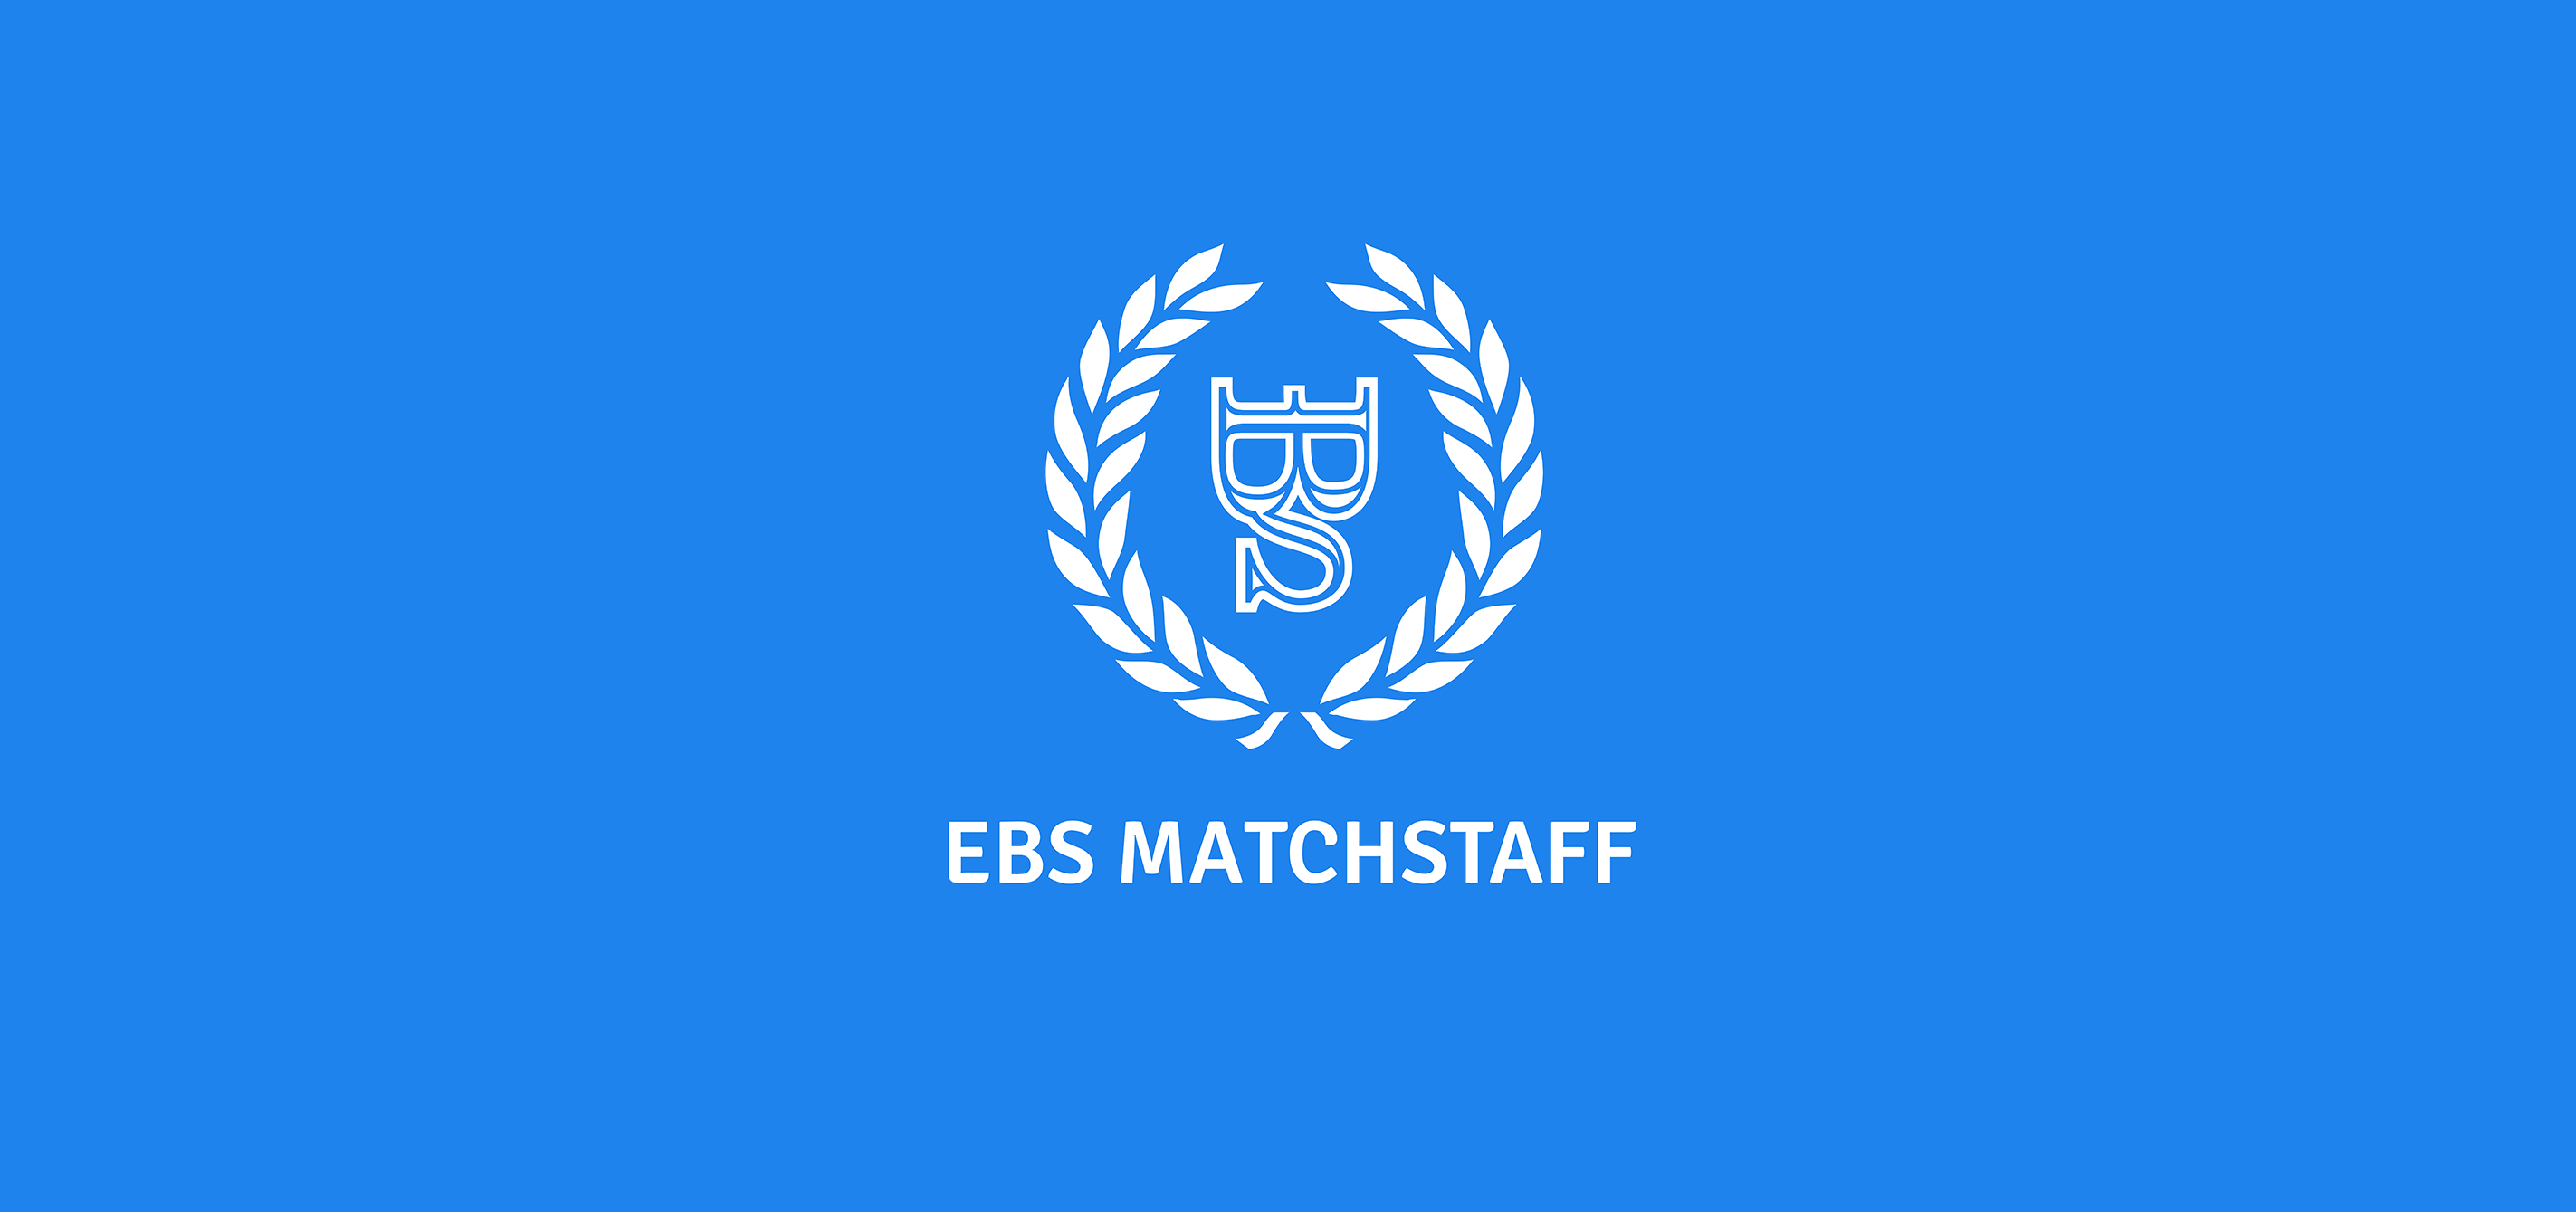 (c) Ebsmatchstaff.com